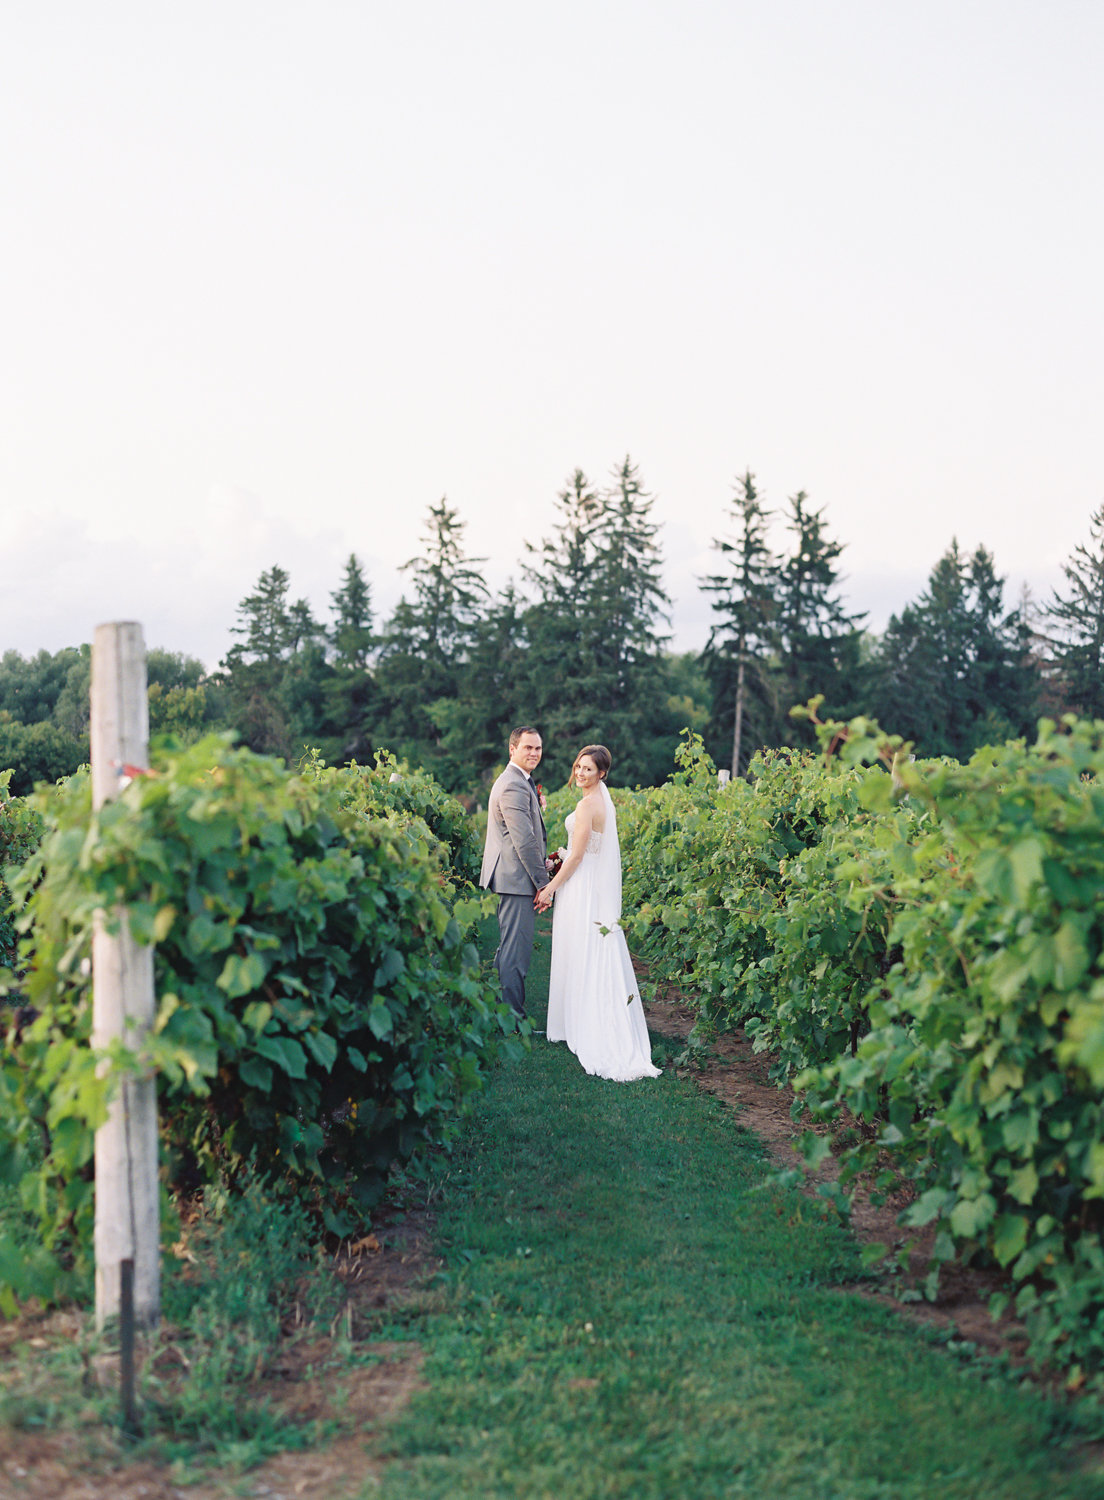 Jacqueline Anne Photography - Ottawa vineyard wedding-28